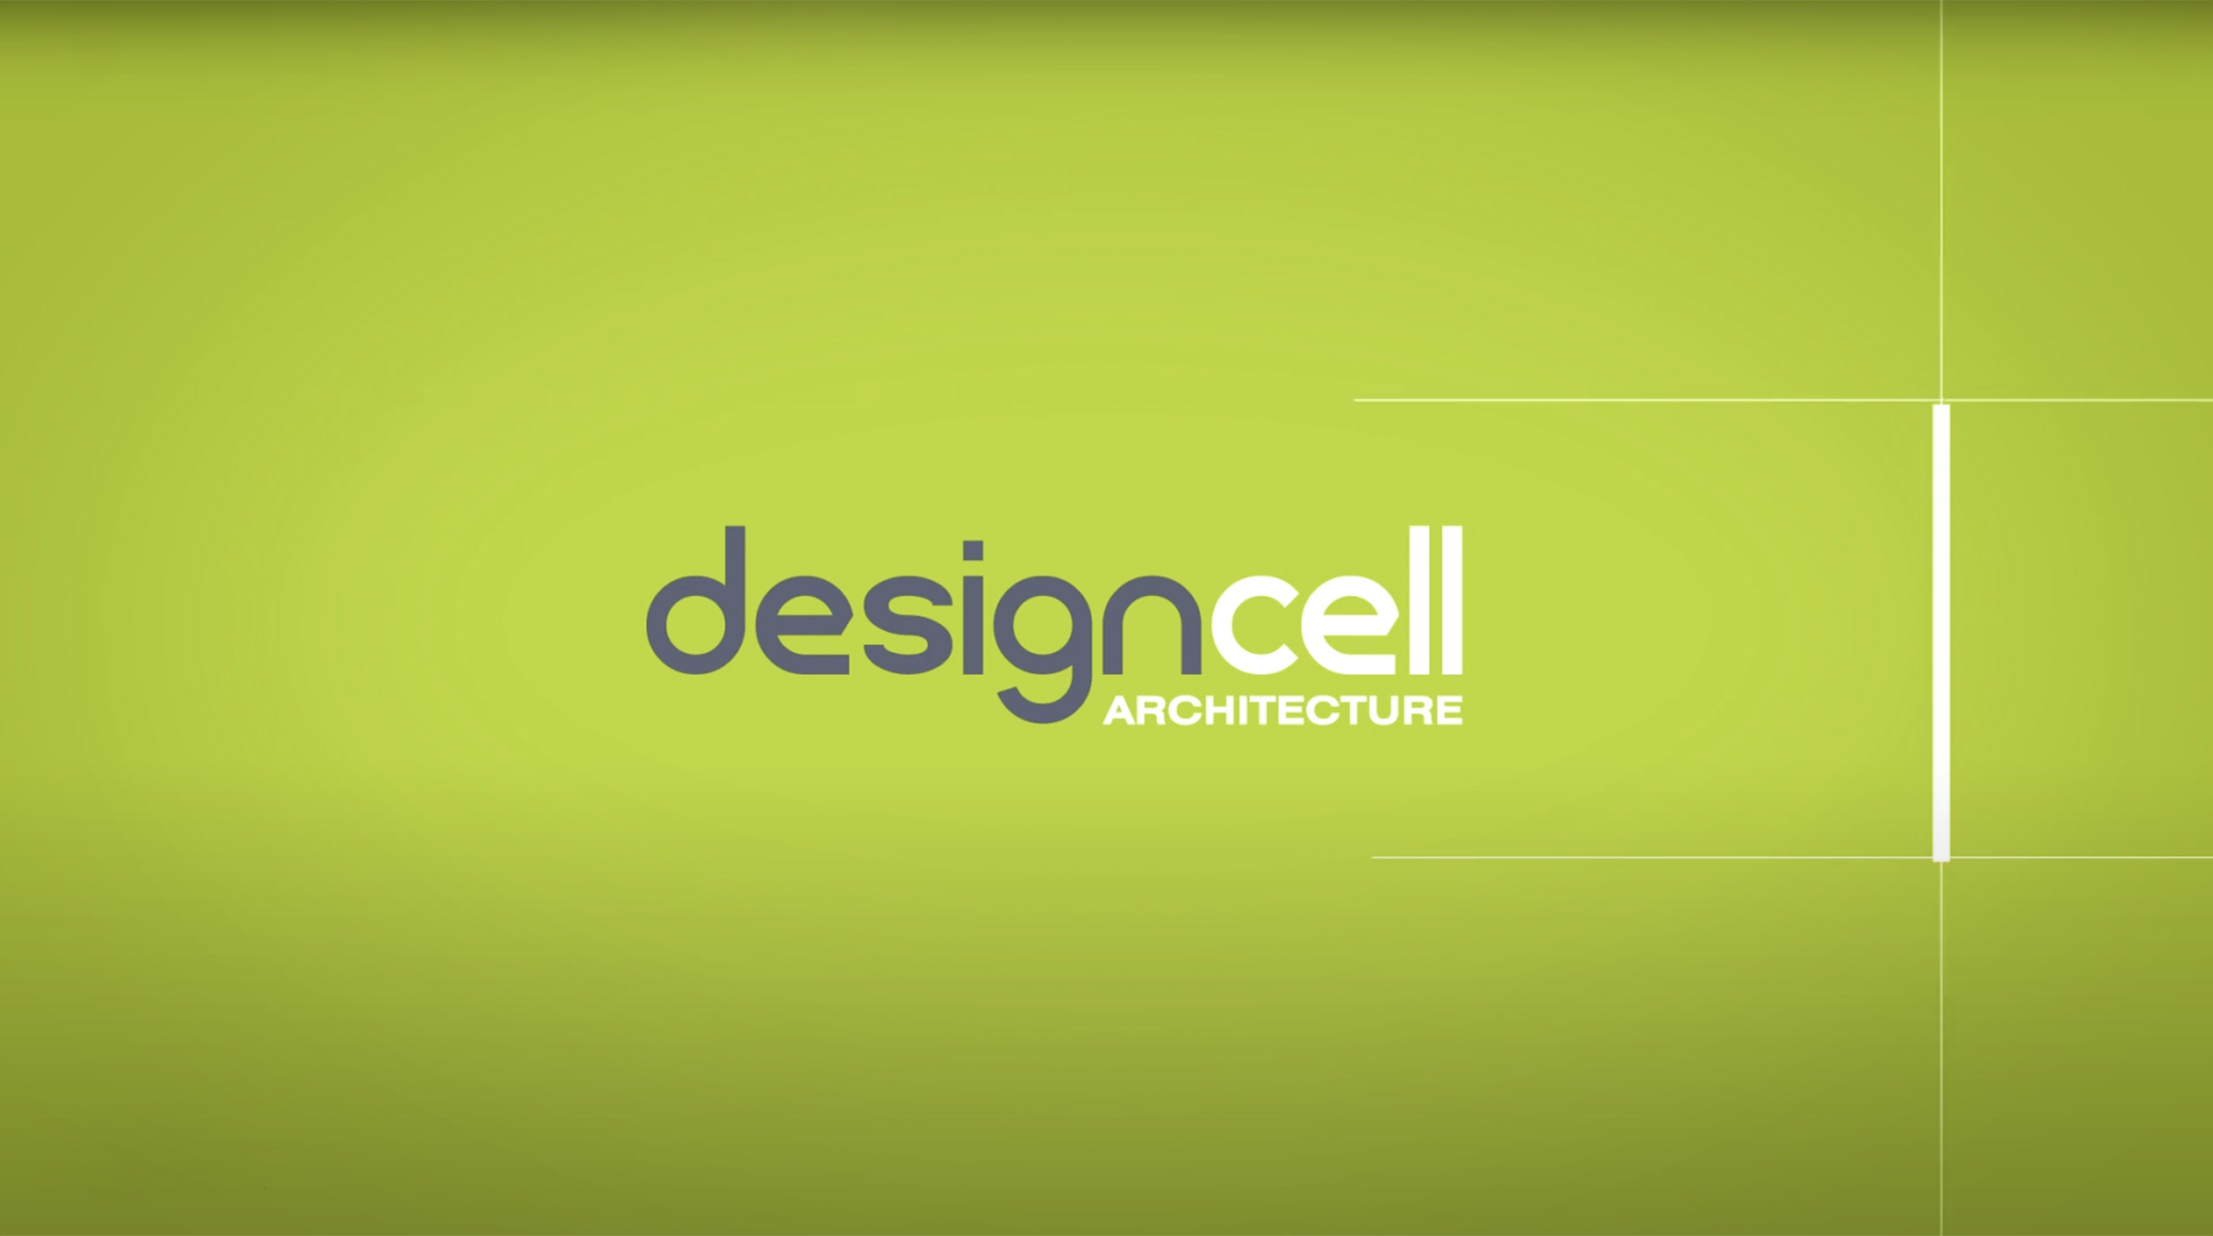 DesignCell Architecture Video Cover